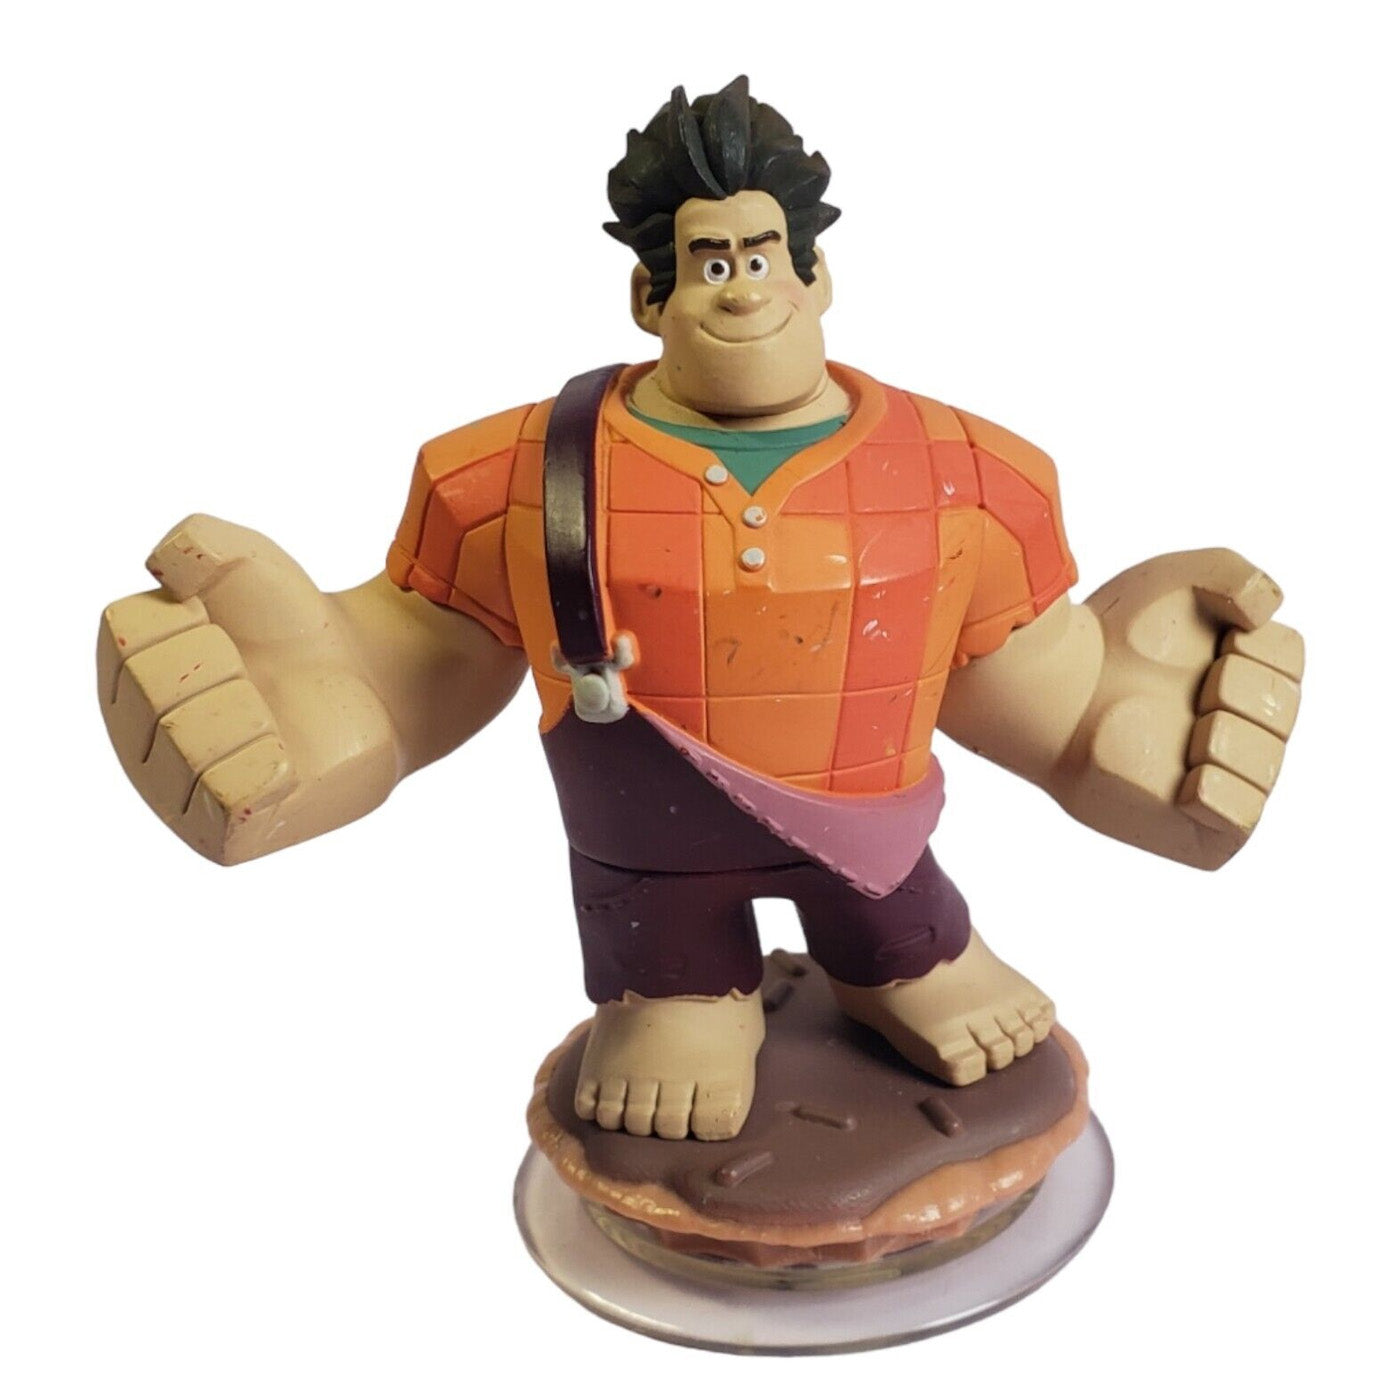 Disney Infinity 1.0 Character: Wreck-It Ralph